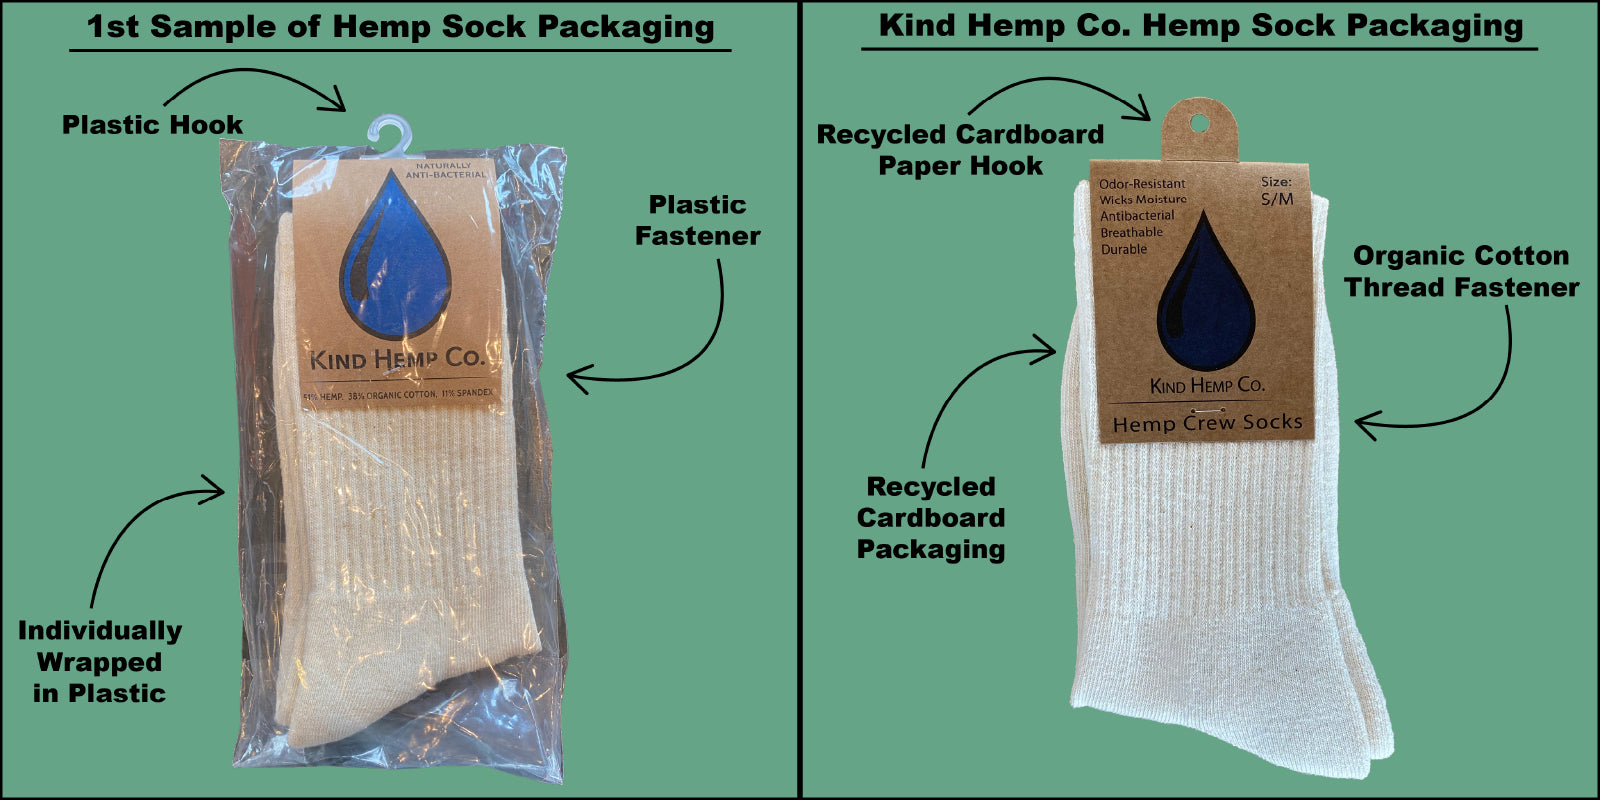 Kind Hemp Co Plastic-free Hemp Sock Packaging